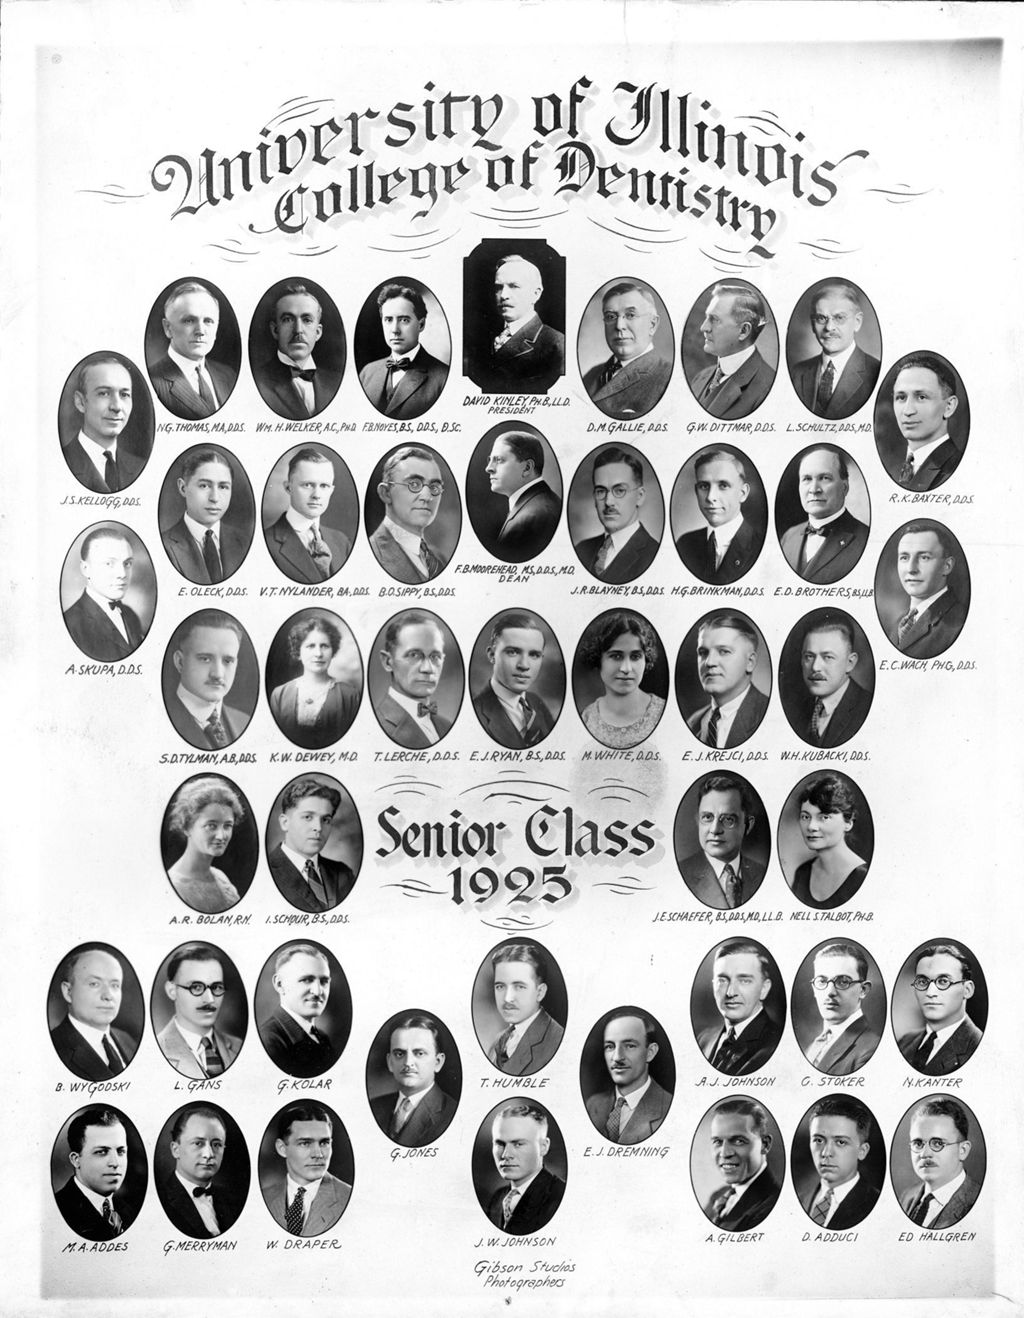 1925 graduating class, University of Illinois College of Dentistry